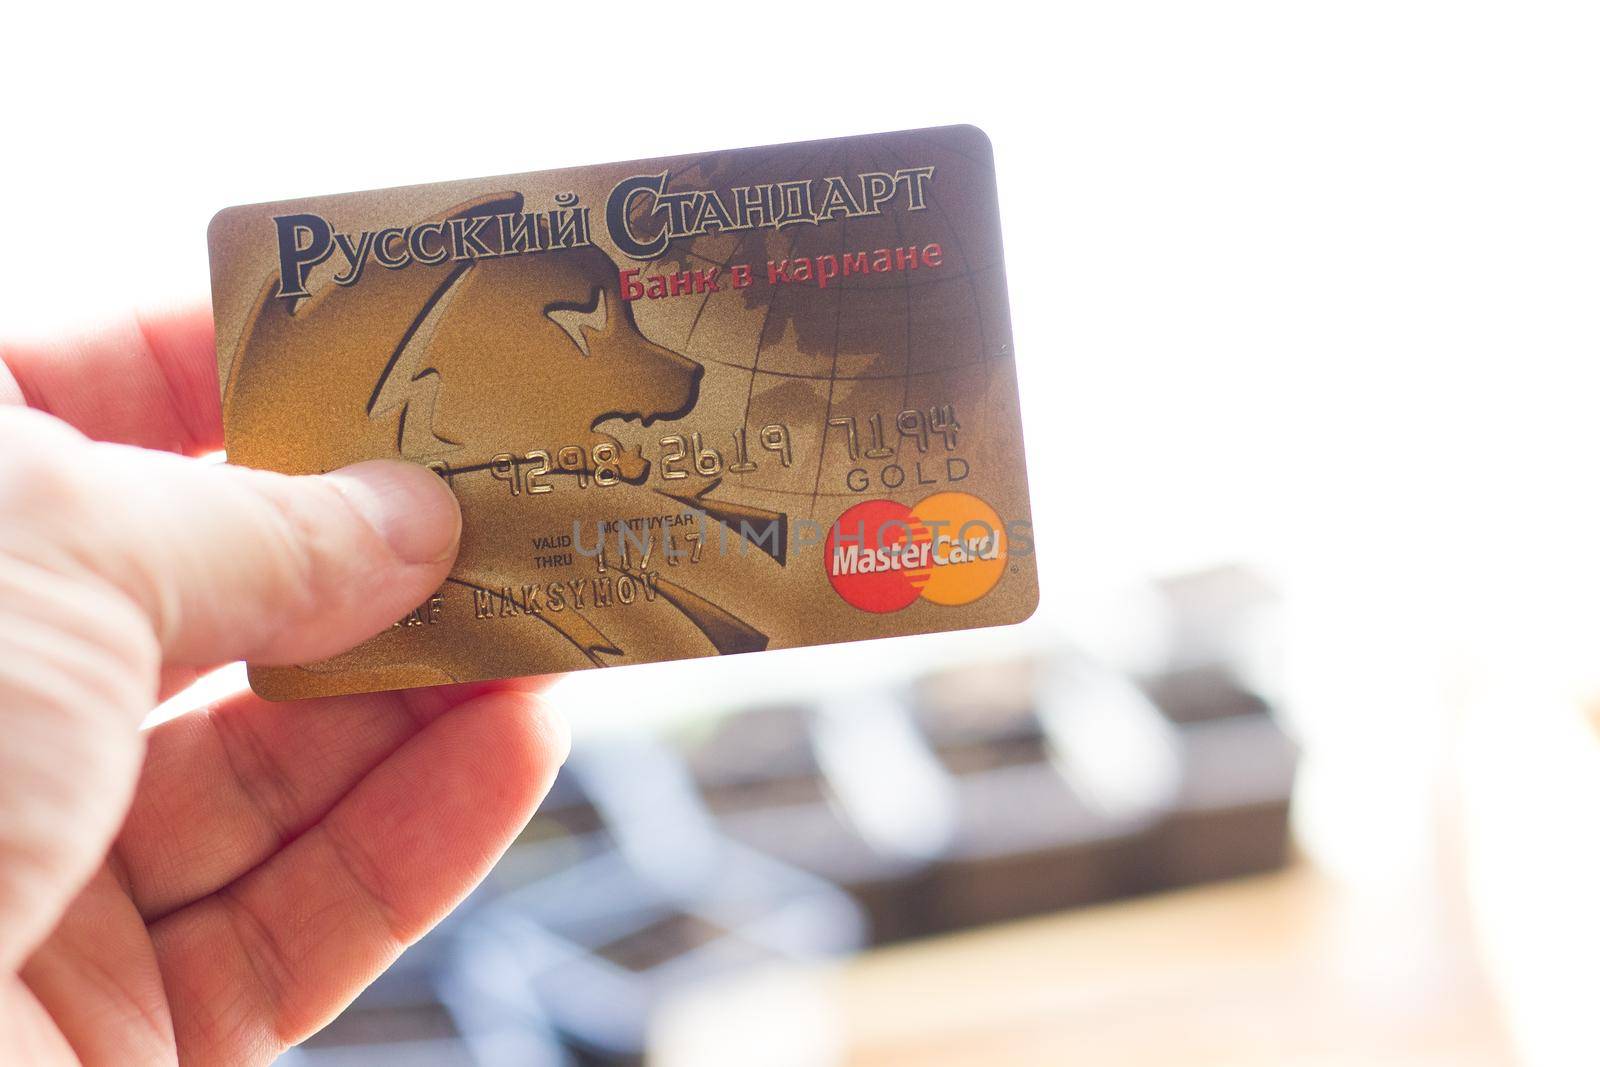 Ryazan, Russia - February 27, 2018: Customer hods Mastercard Gold ready to pay